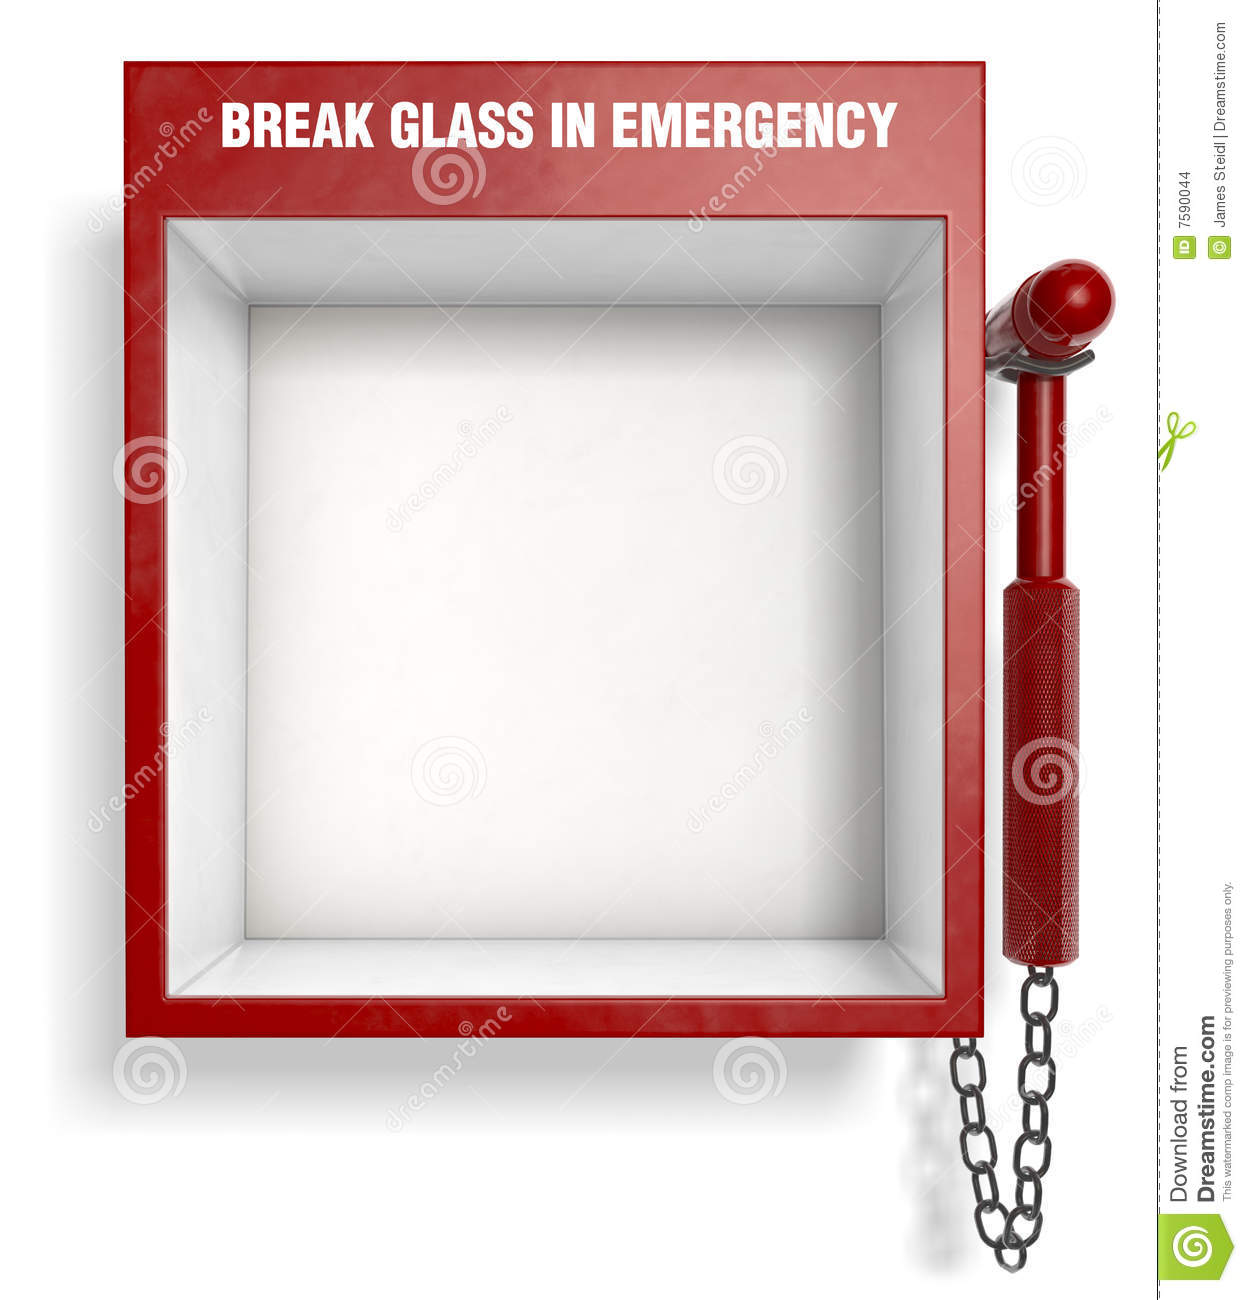 break-glass-emergency-7590044.jpg